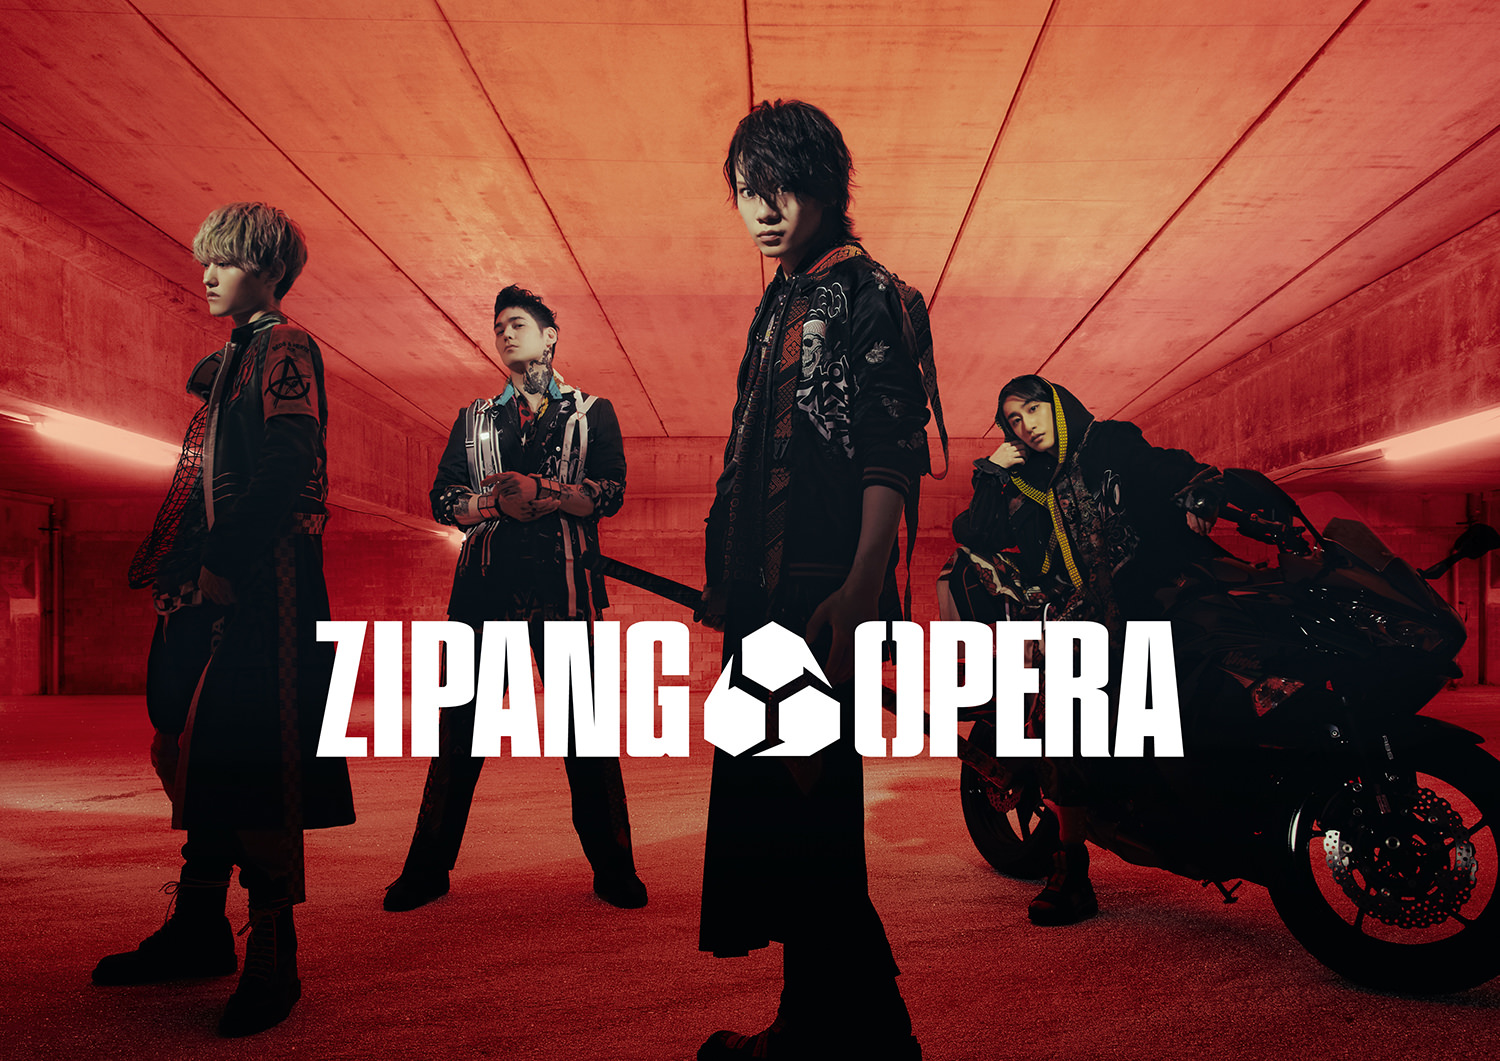 【MUSIC ON! TV（エムオン!）】
ZIPANG OPERA
メジャーデビュー記念撮り下ろし特別番組を
11/4(木)にエムオン!で放送決定！
プレゼントキャンペーンもスタート！